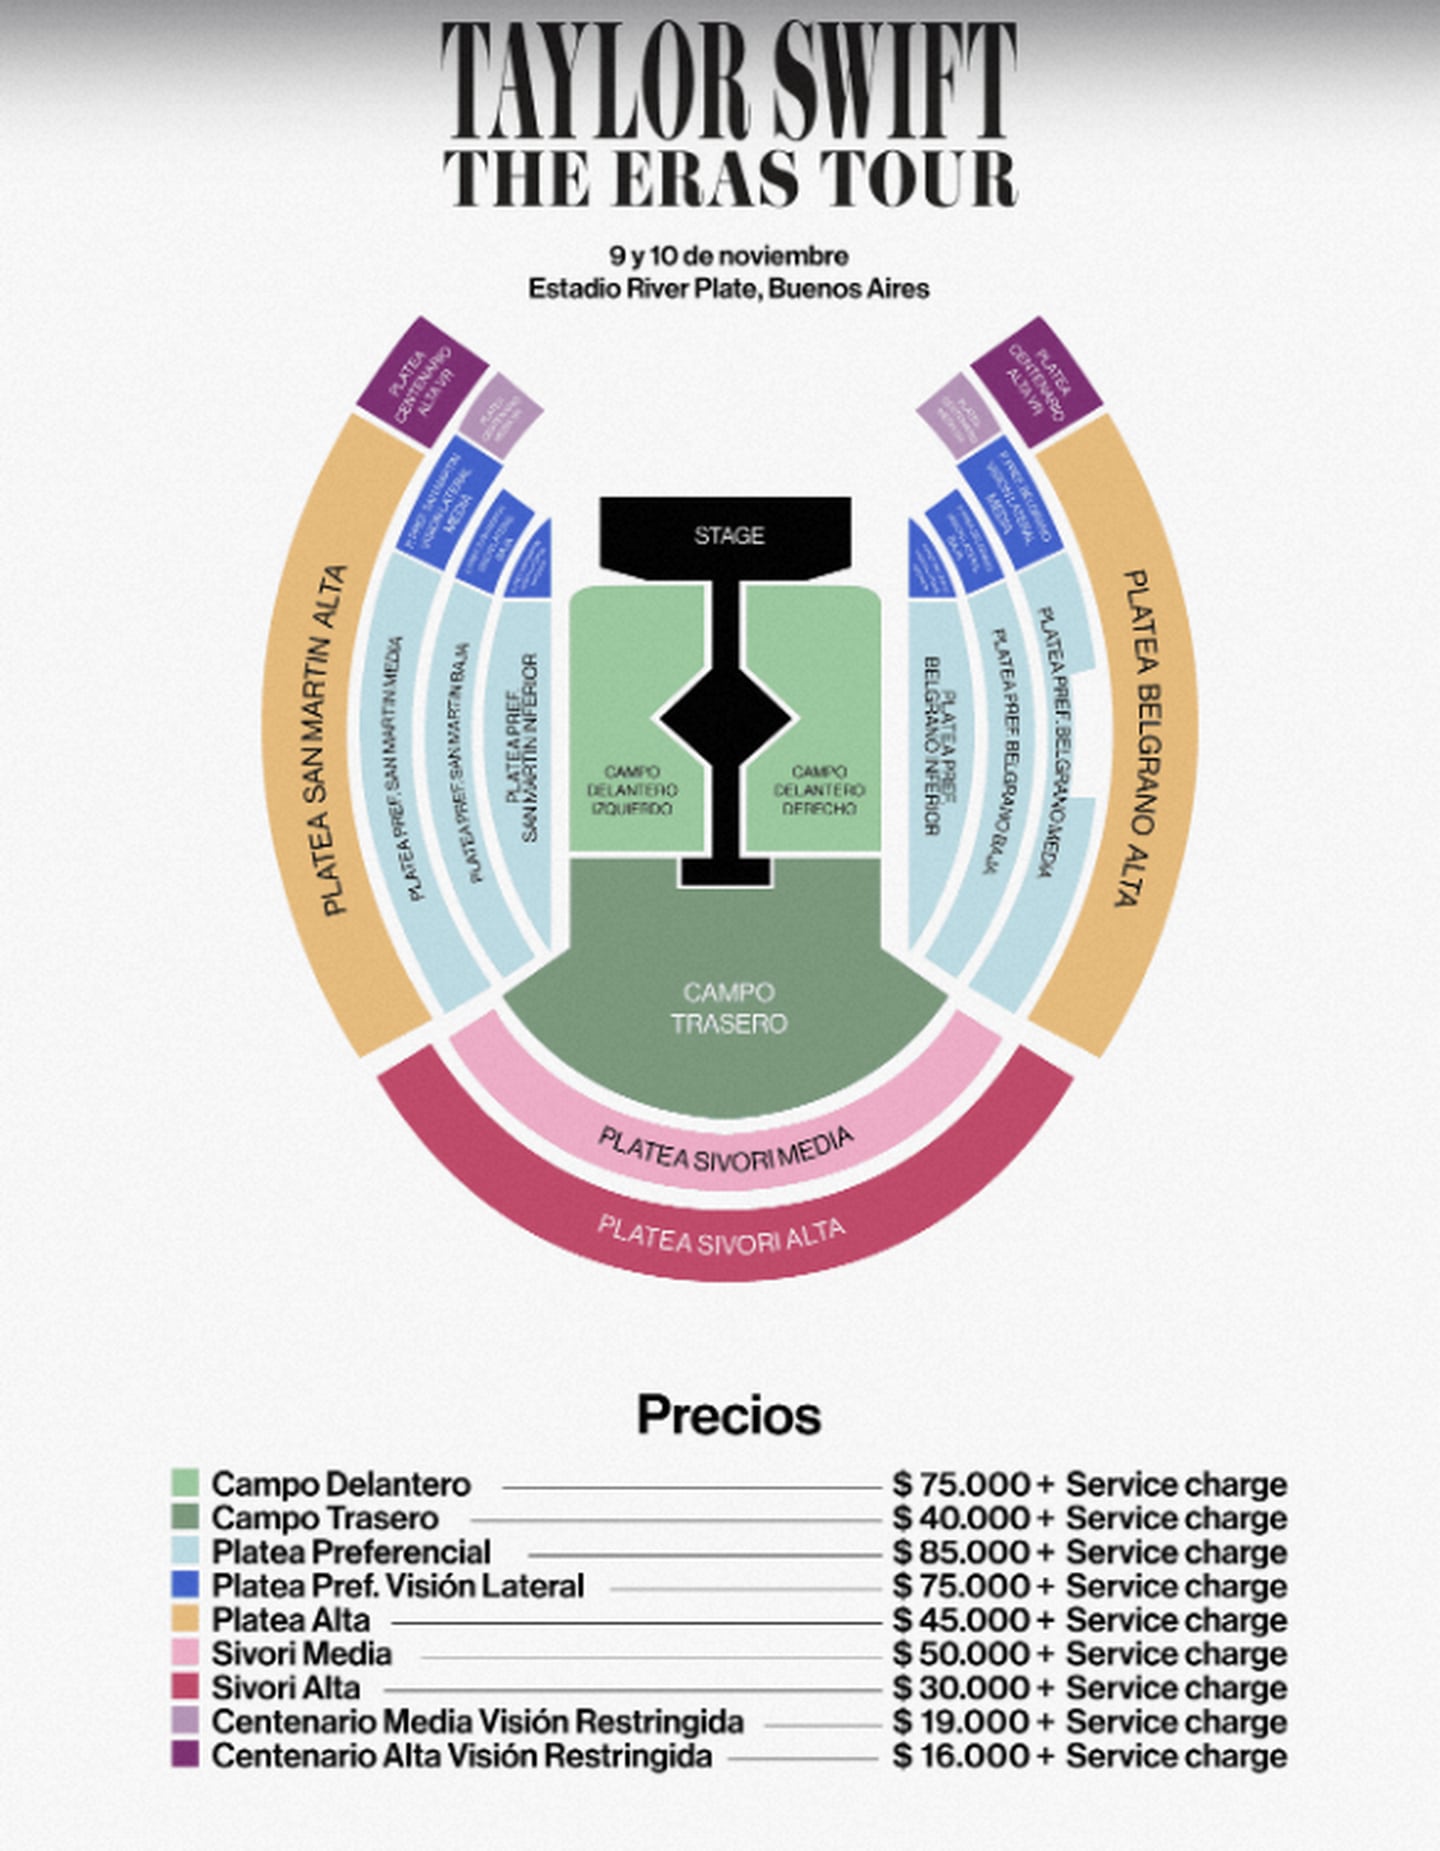 Precios de las entradas a "The Eras Tour" de Taylor Swift en Argentina